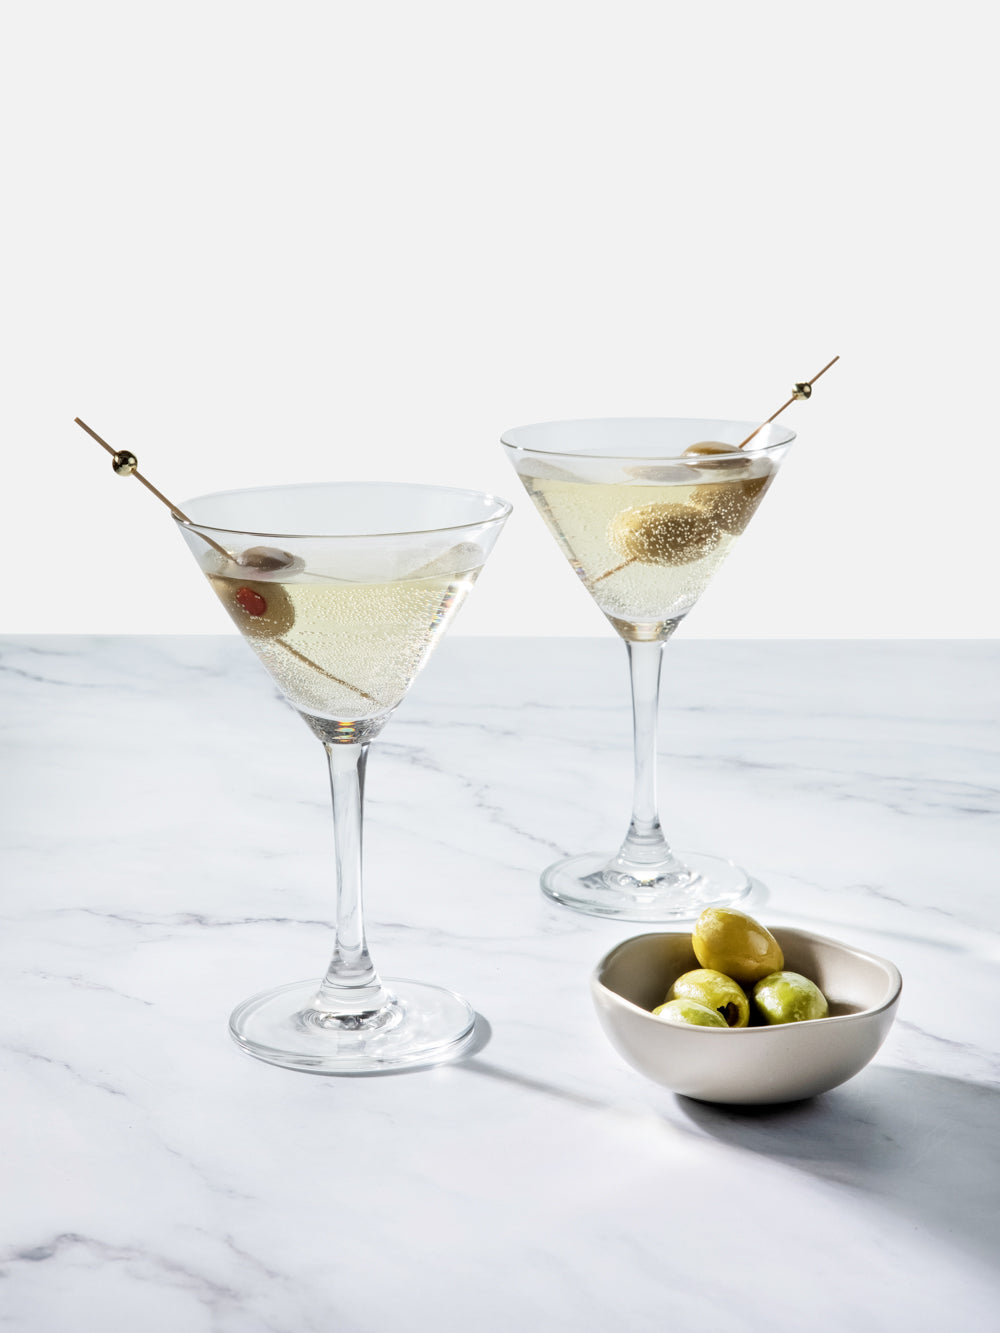 Lexington Martini Glass